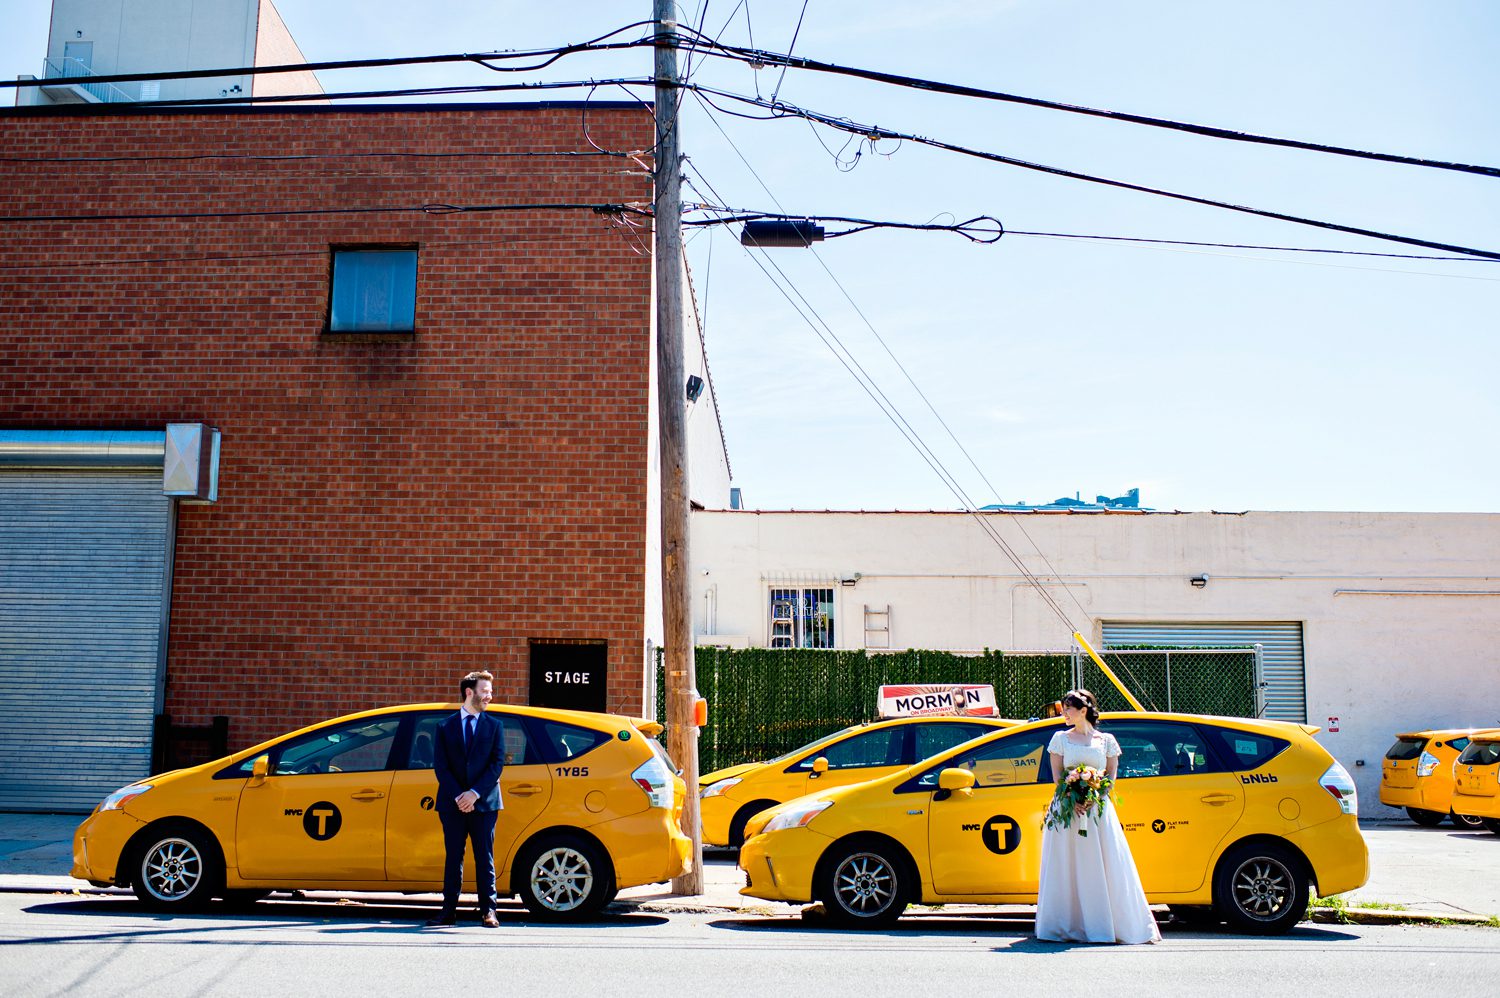 Wedding Photos with Taxis